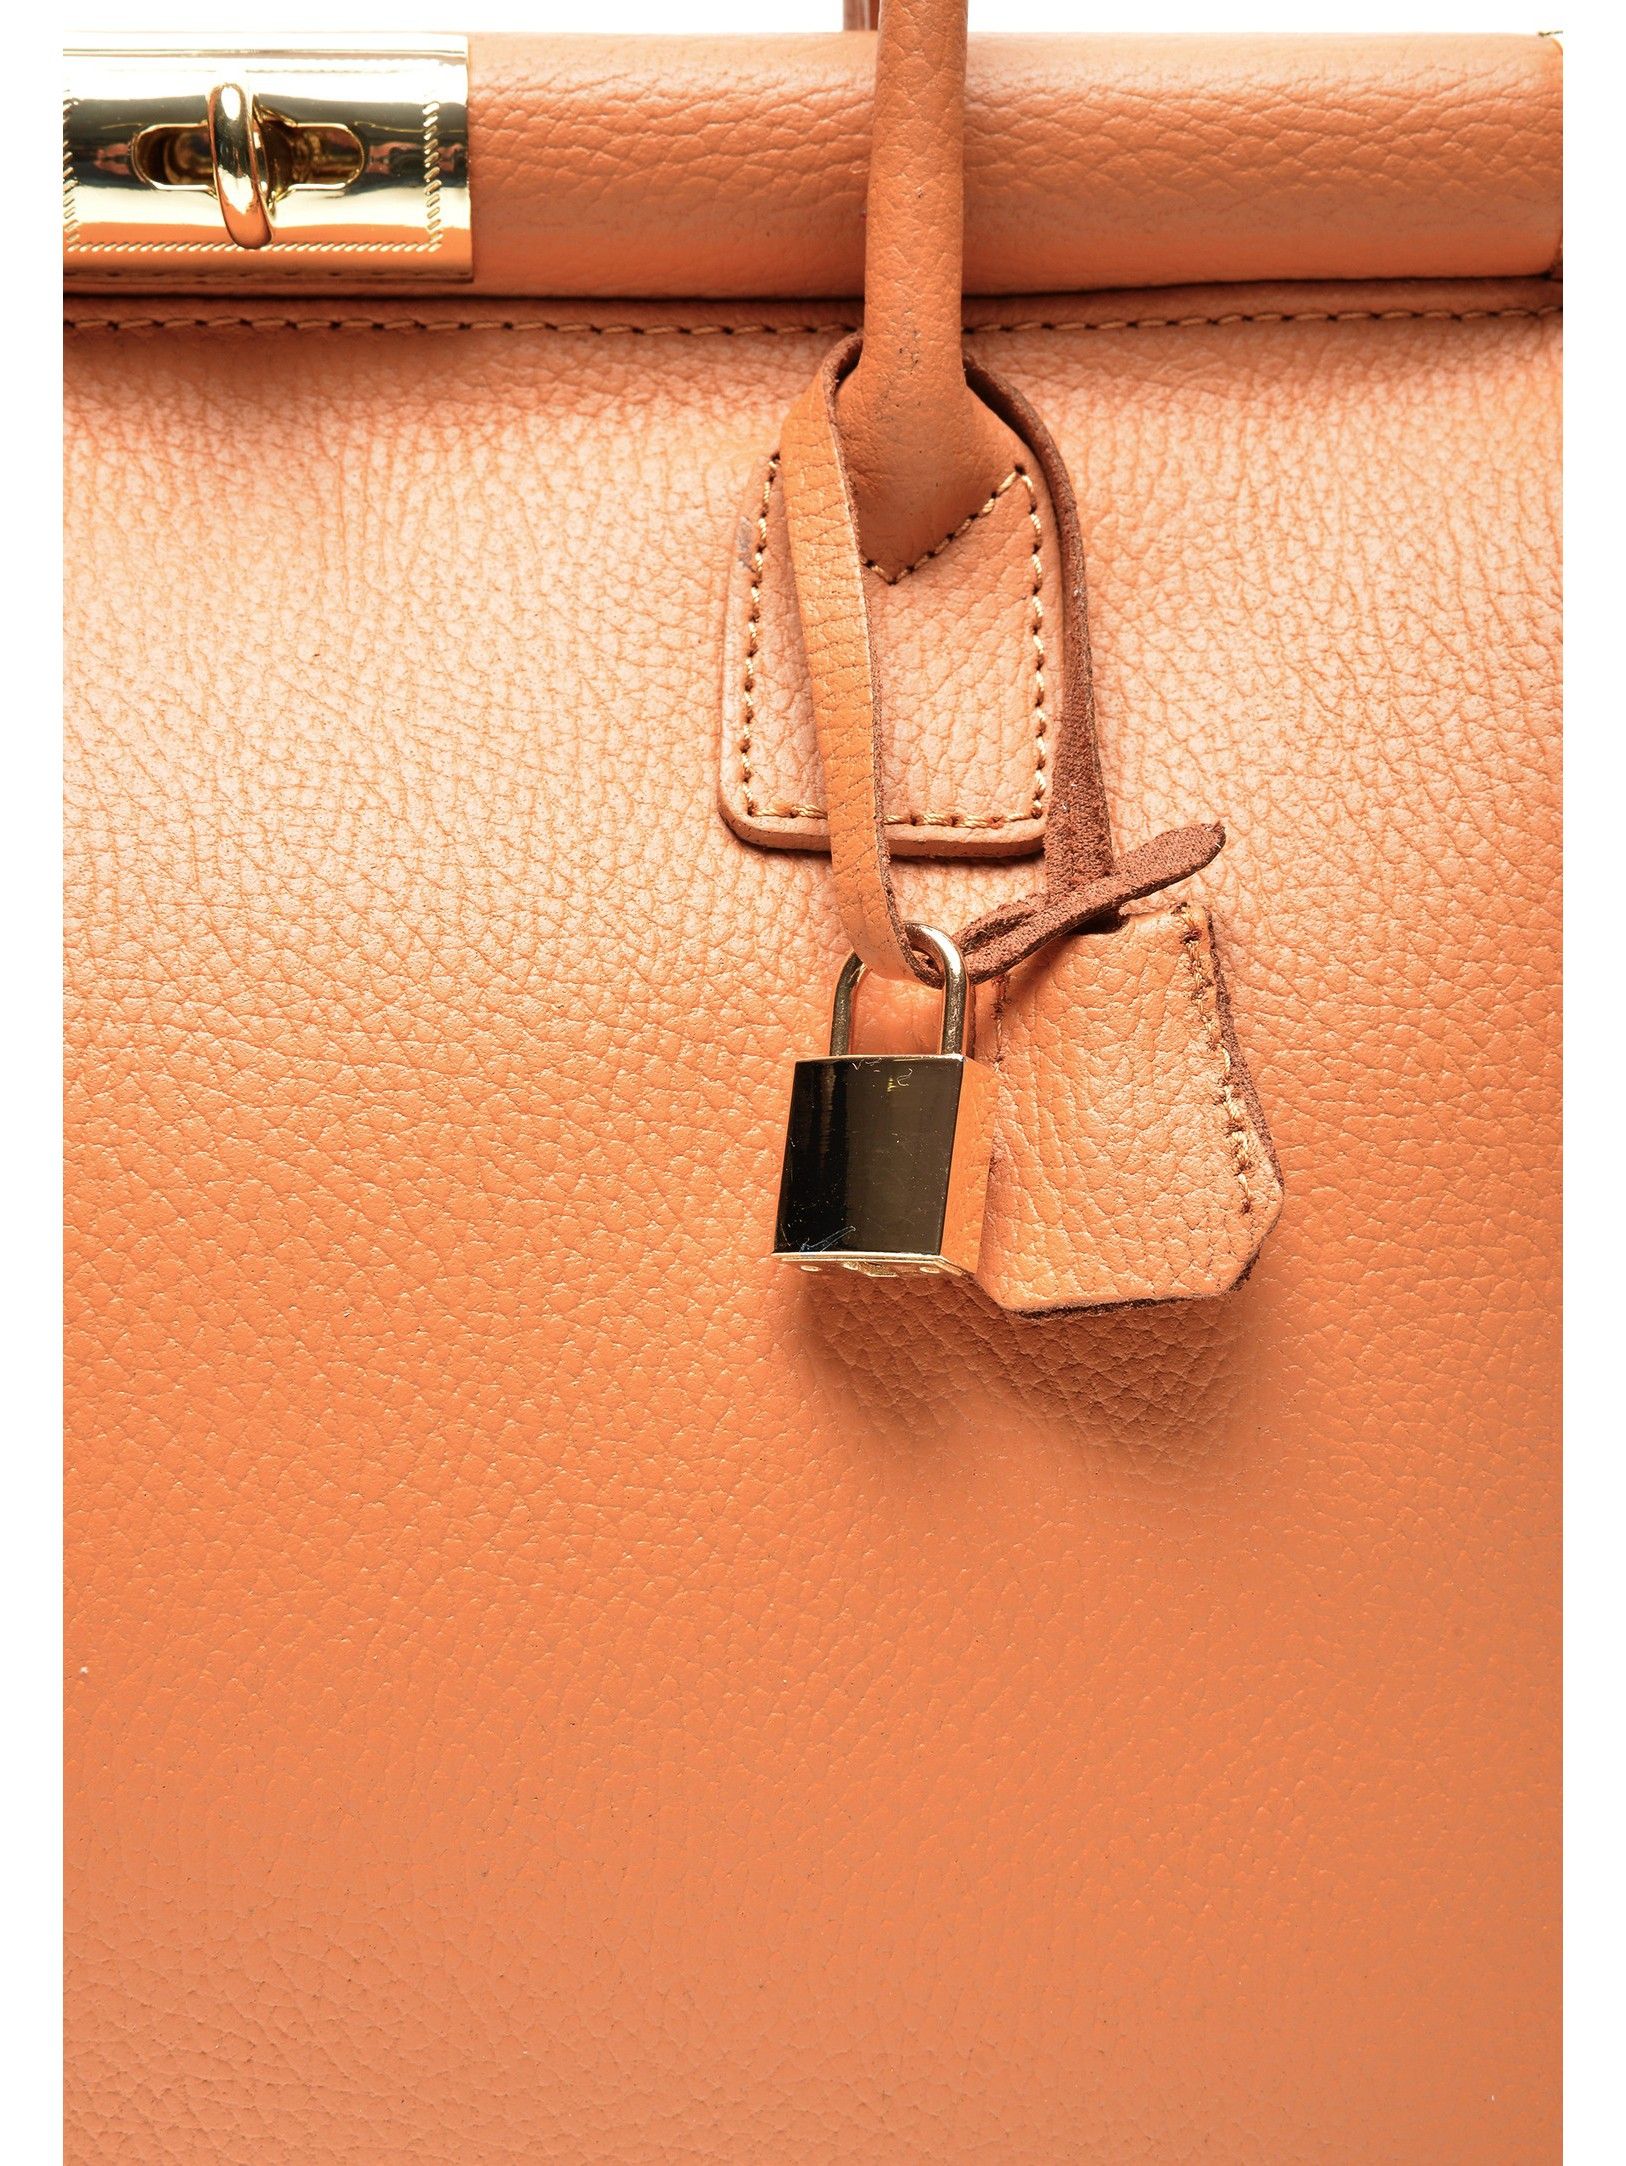 Handbag
100% cow leather
Top clasp closure
Double compartment bag
Interior zip pocket
Dimensions(L):26x35x16 cm
Handle: 40 cm
Shoulder strap:110 cm